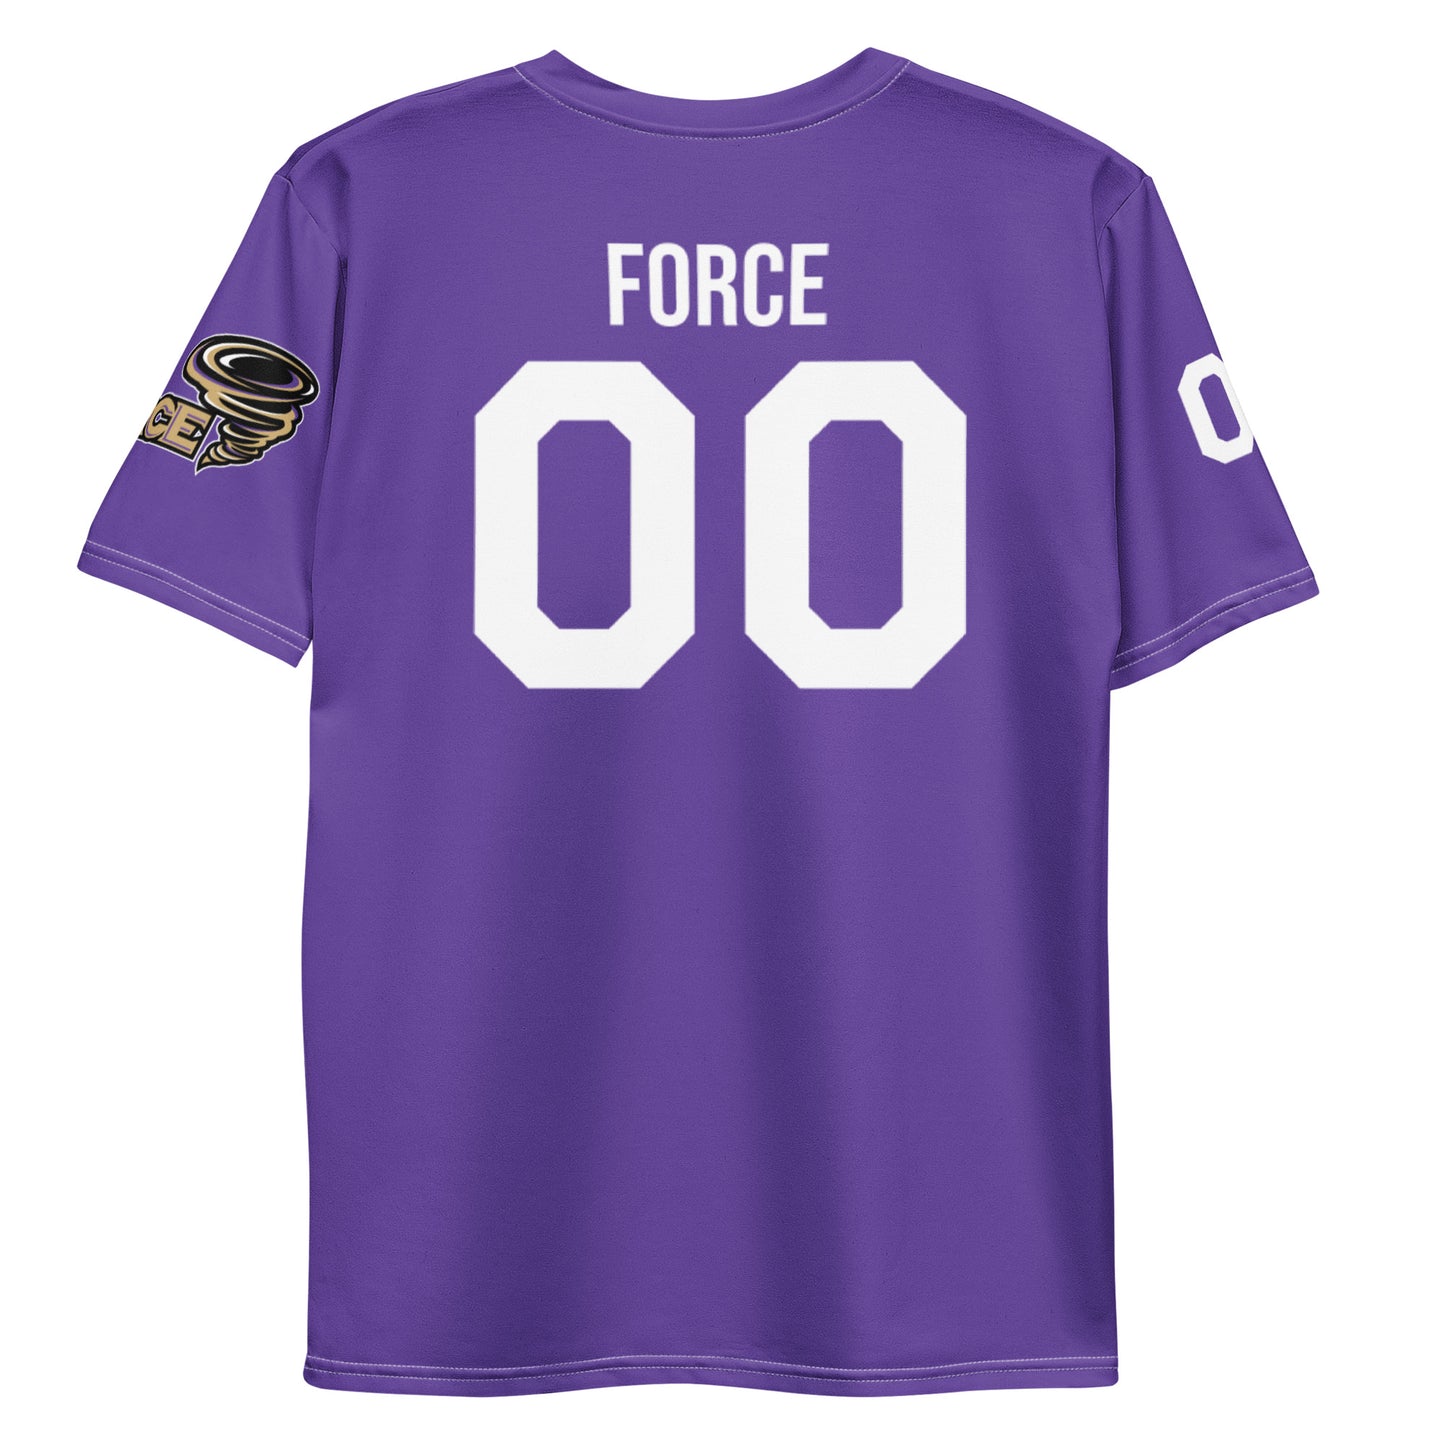 Force Men's t-shirt